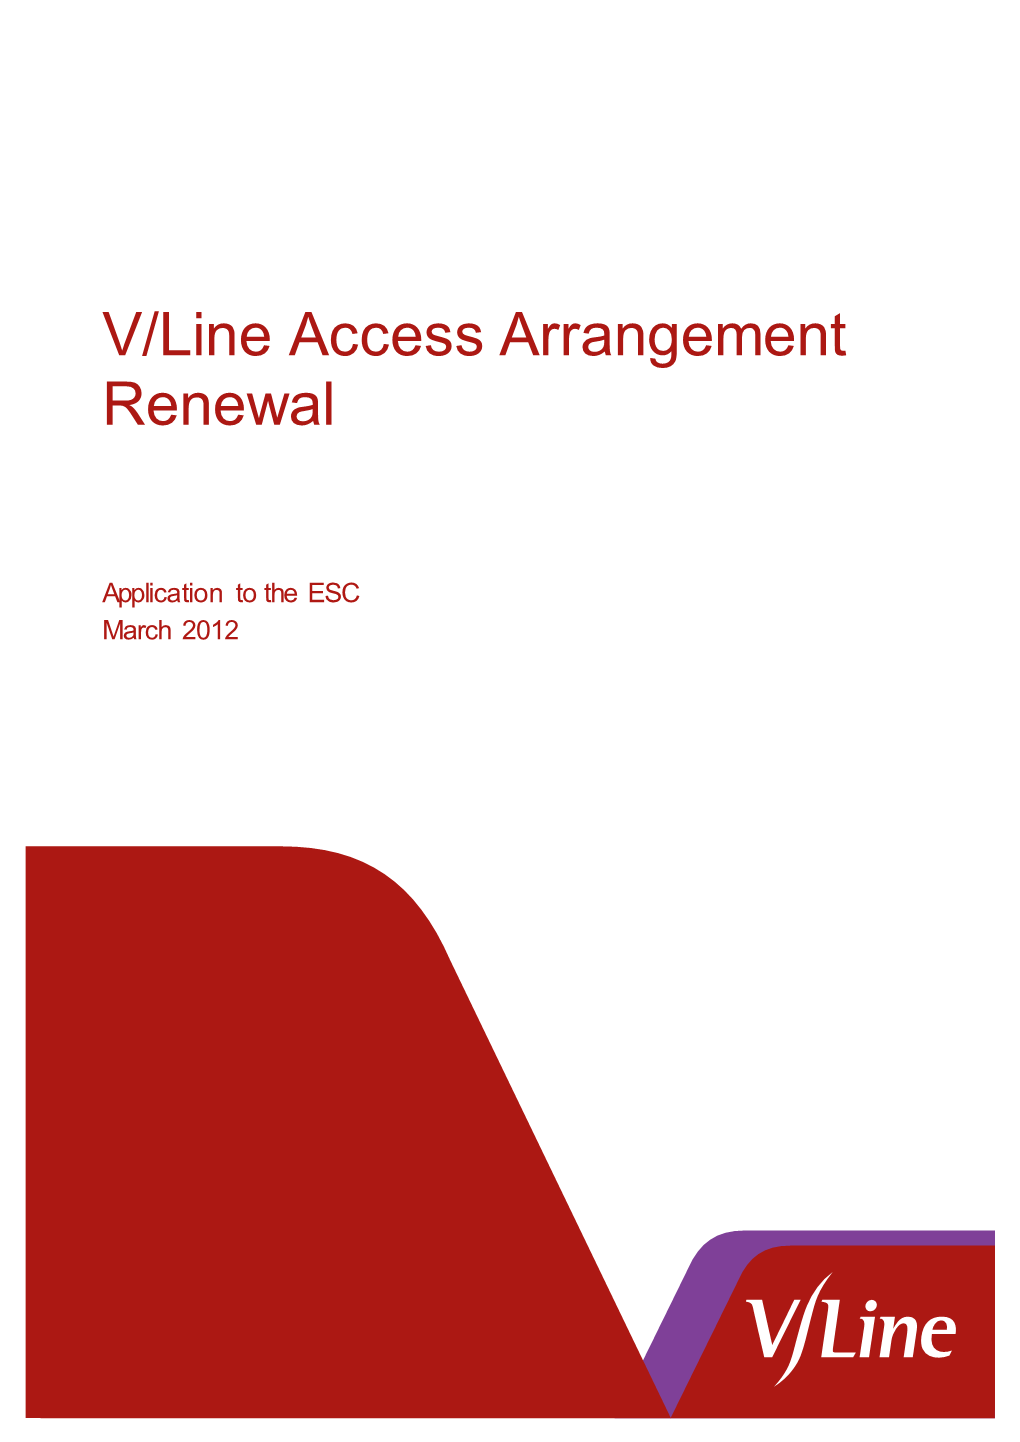 V/Line Access Arrangement Renewal